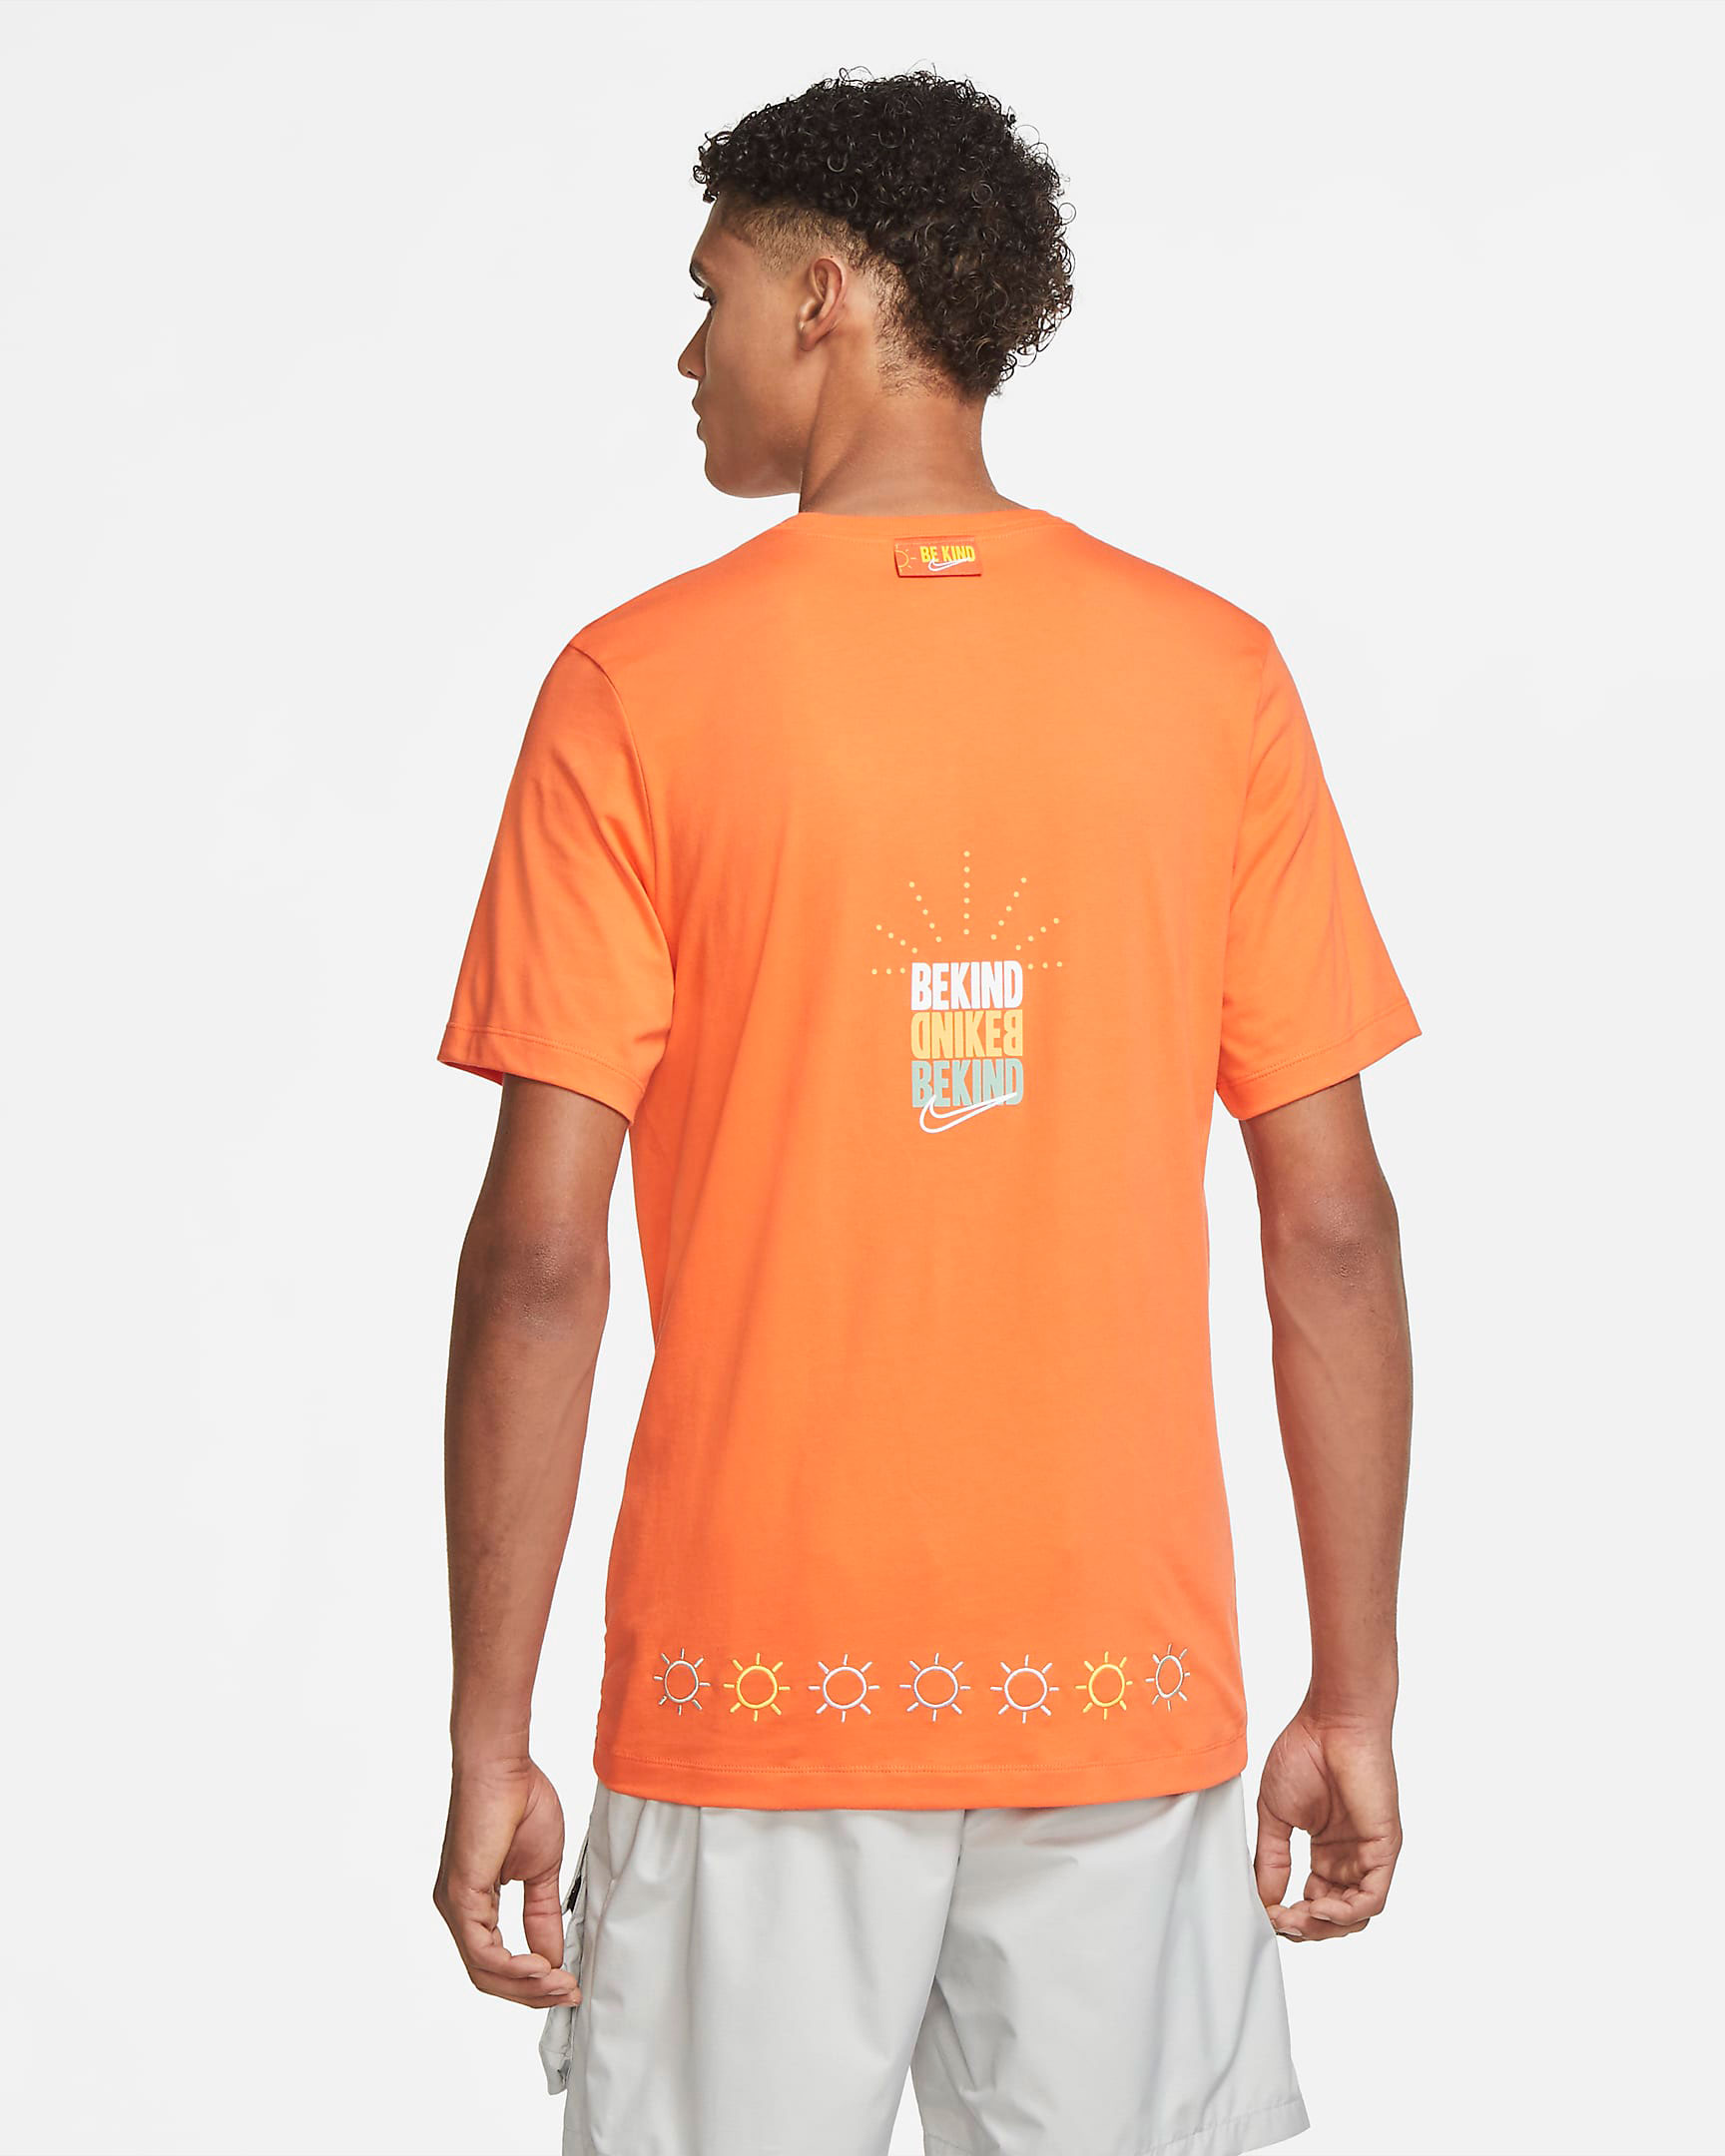 nike-sportswear-be-kind-orange-shirt-2